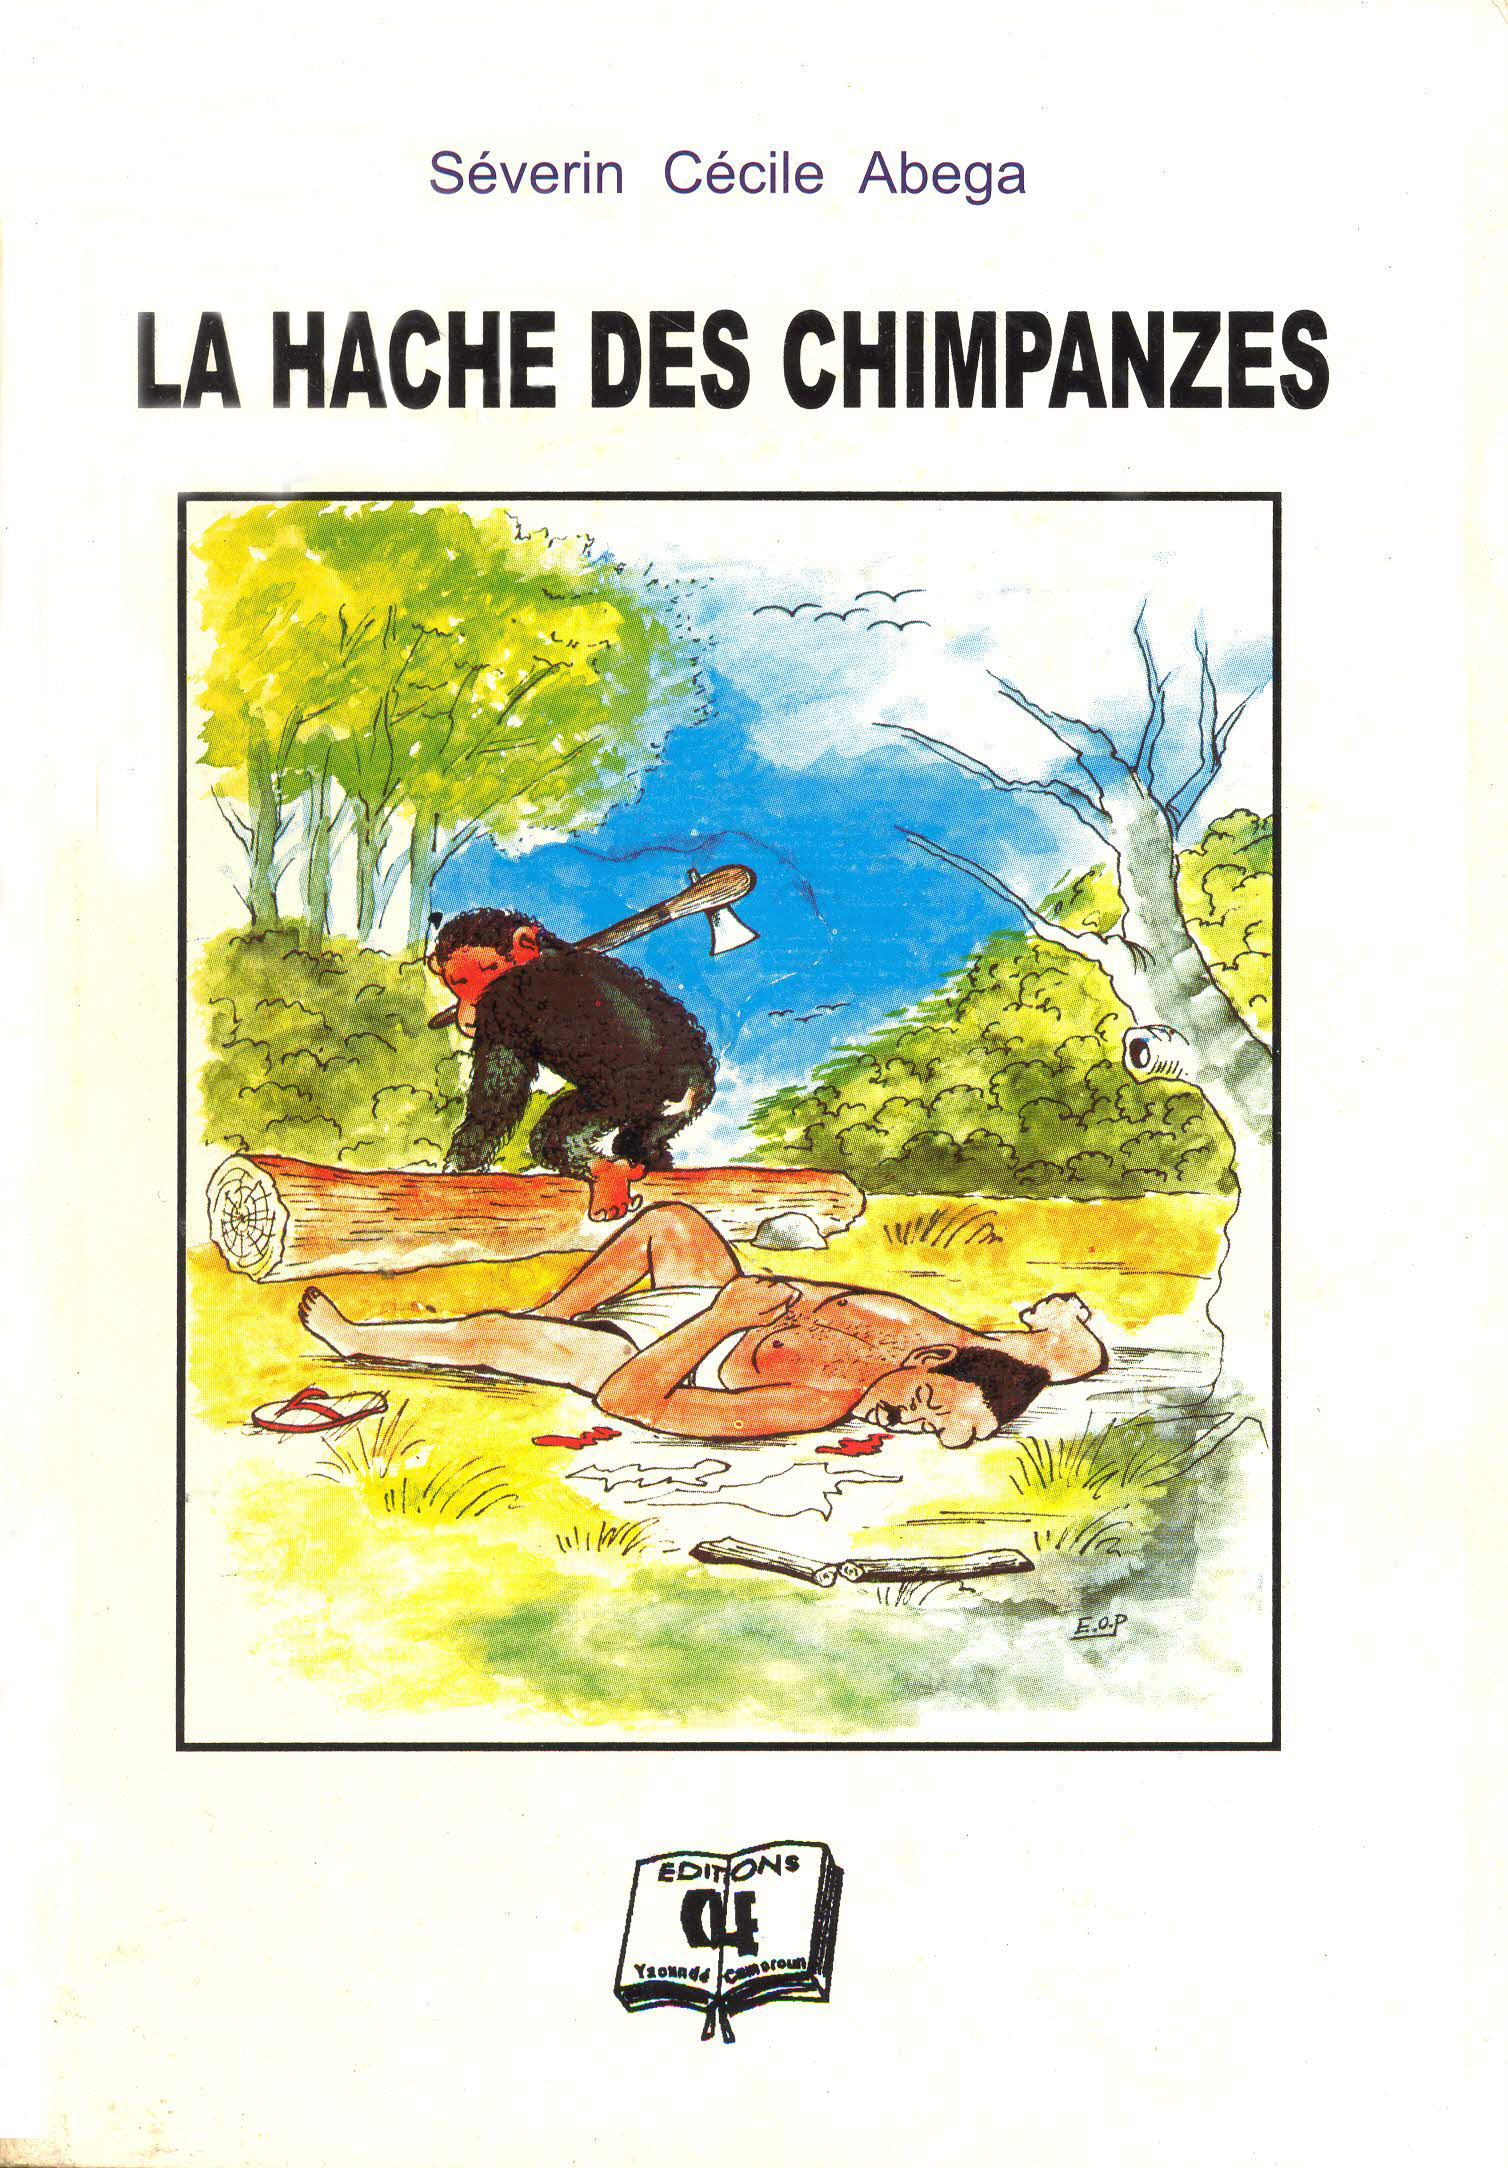 La hache des chimpanzés